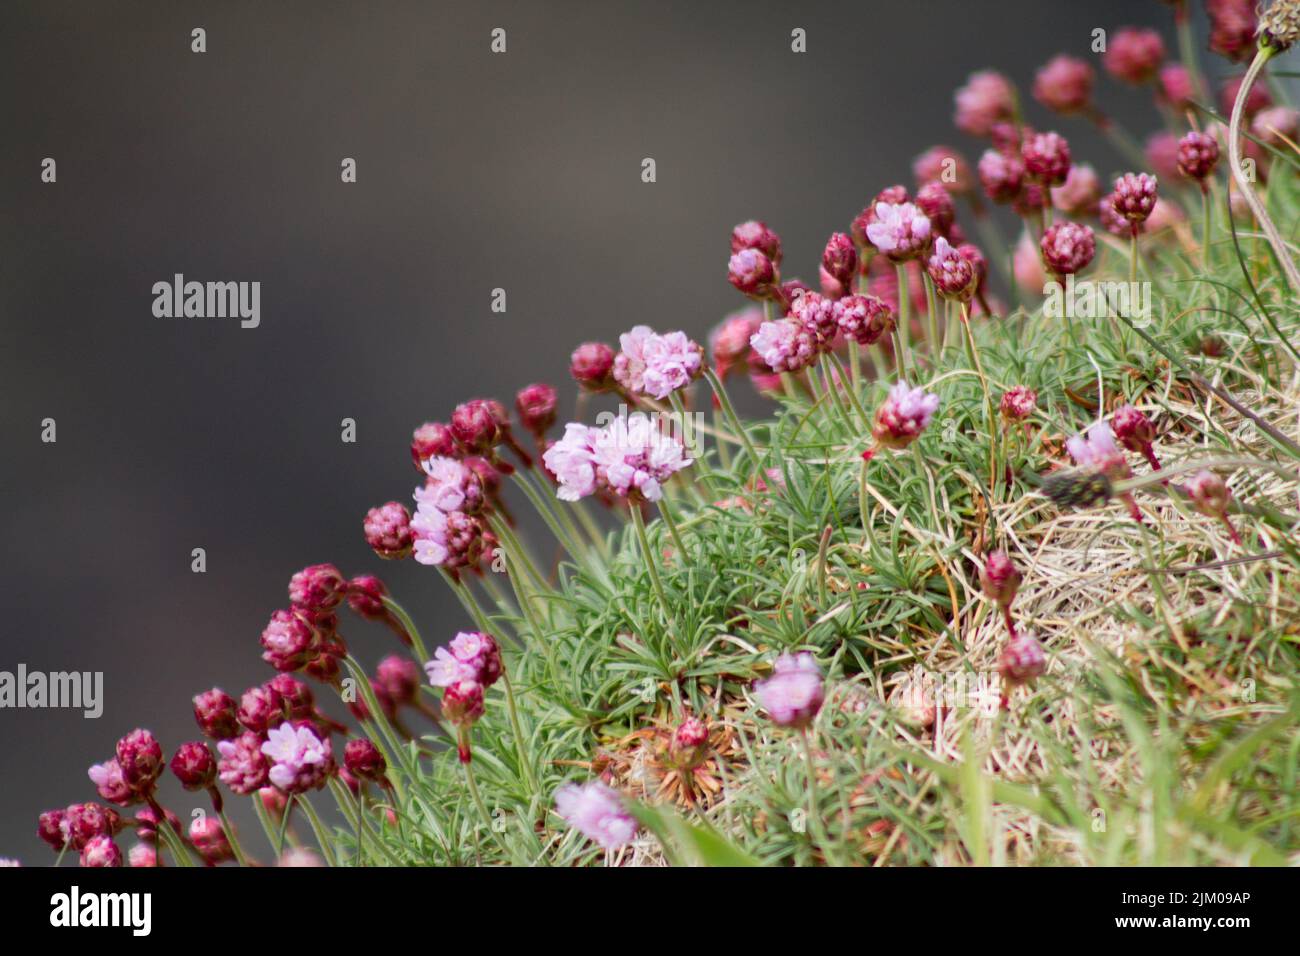 Flores marinas fotografías e imágenes de alta resolución - Alamy